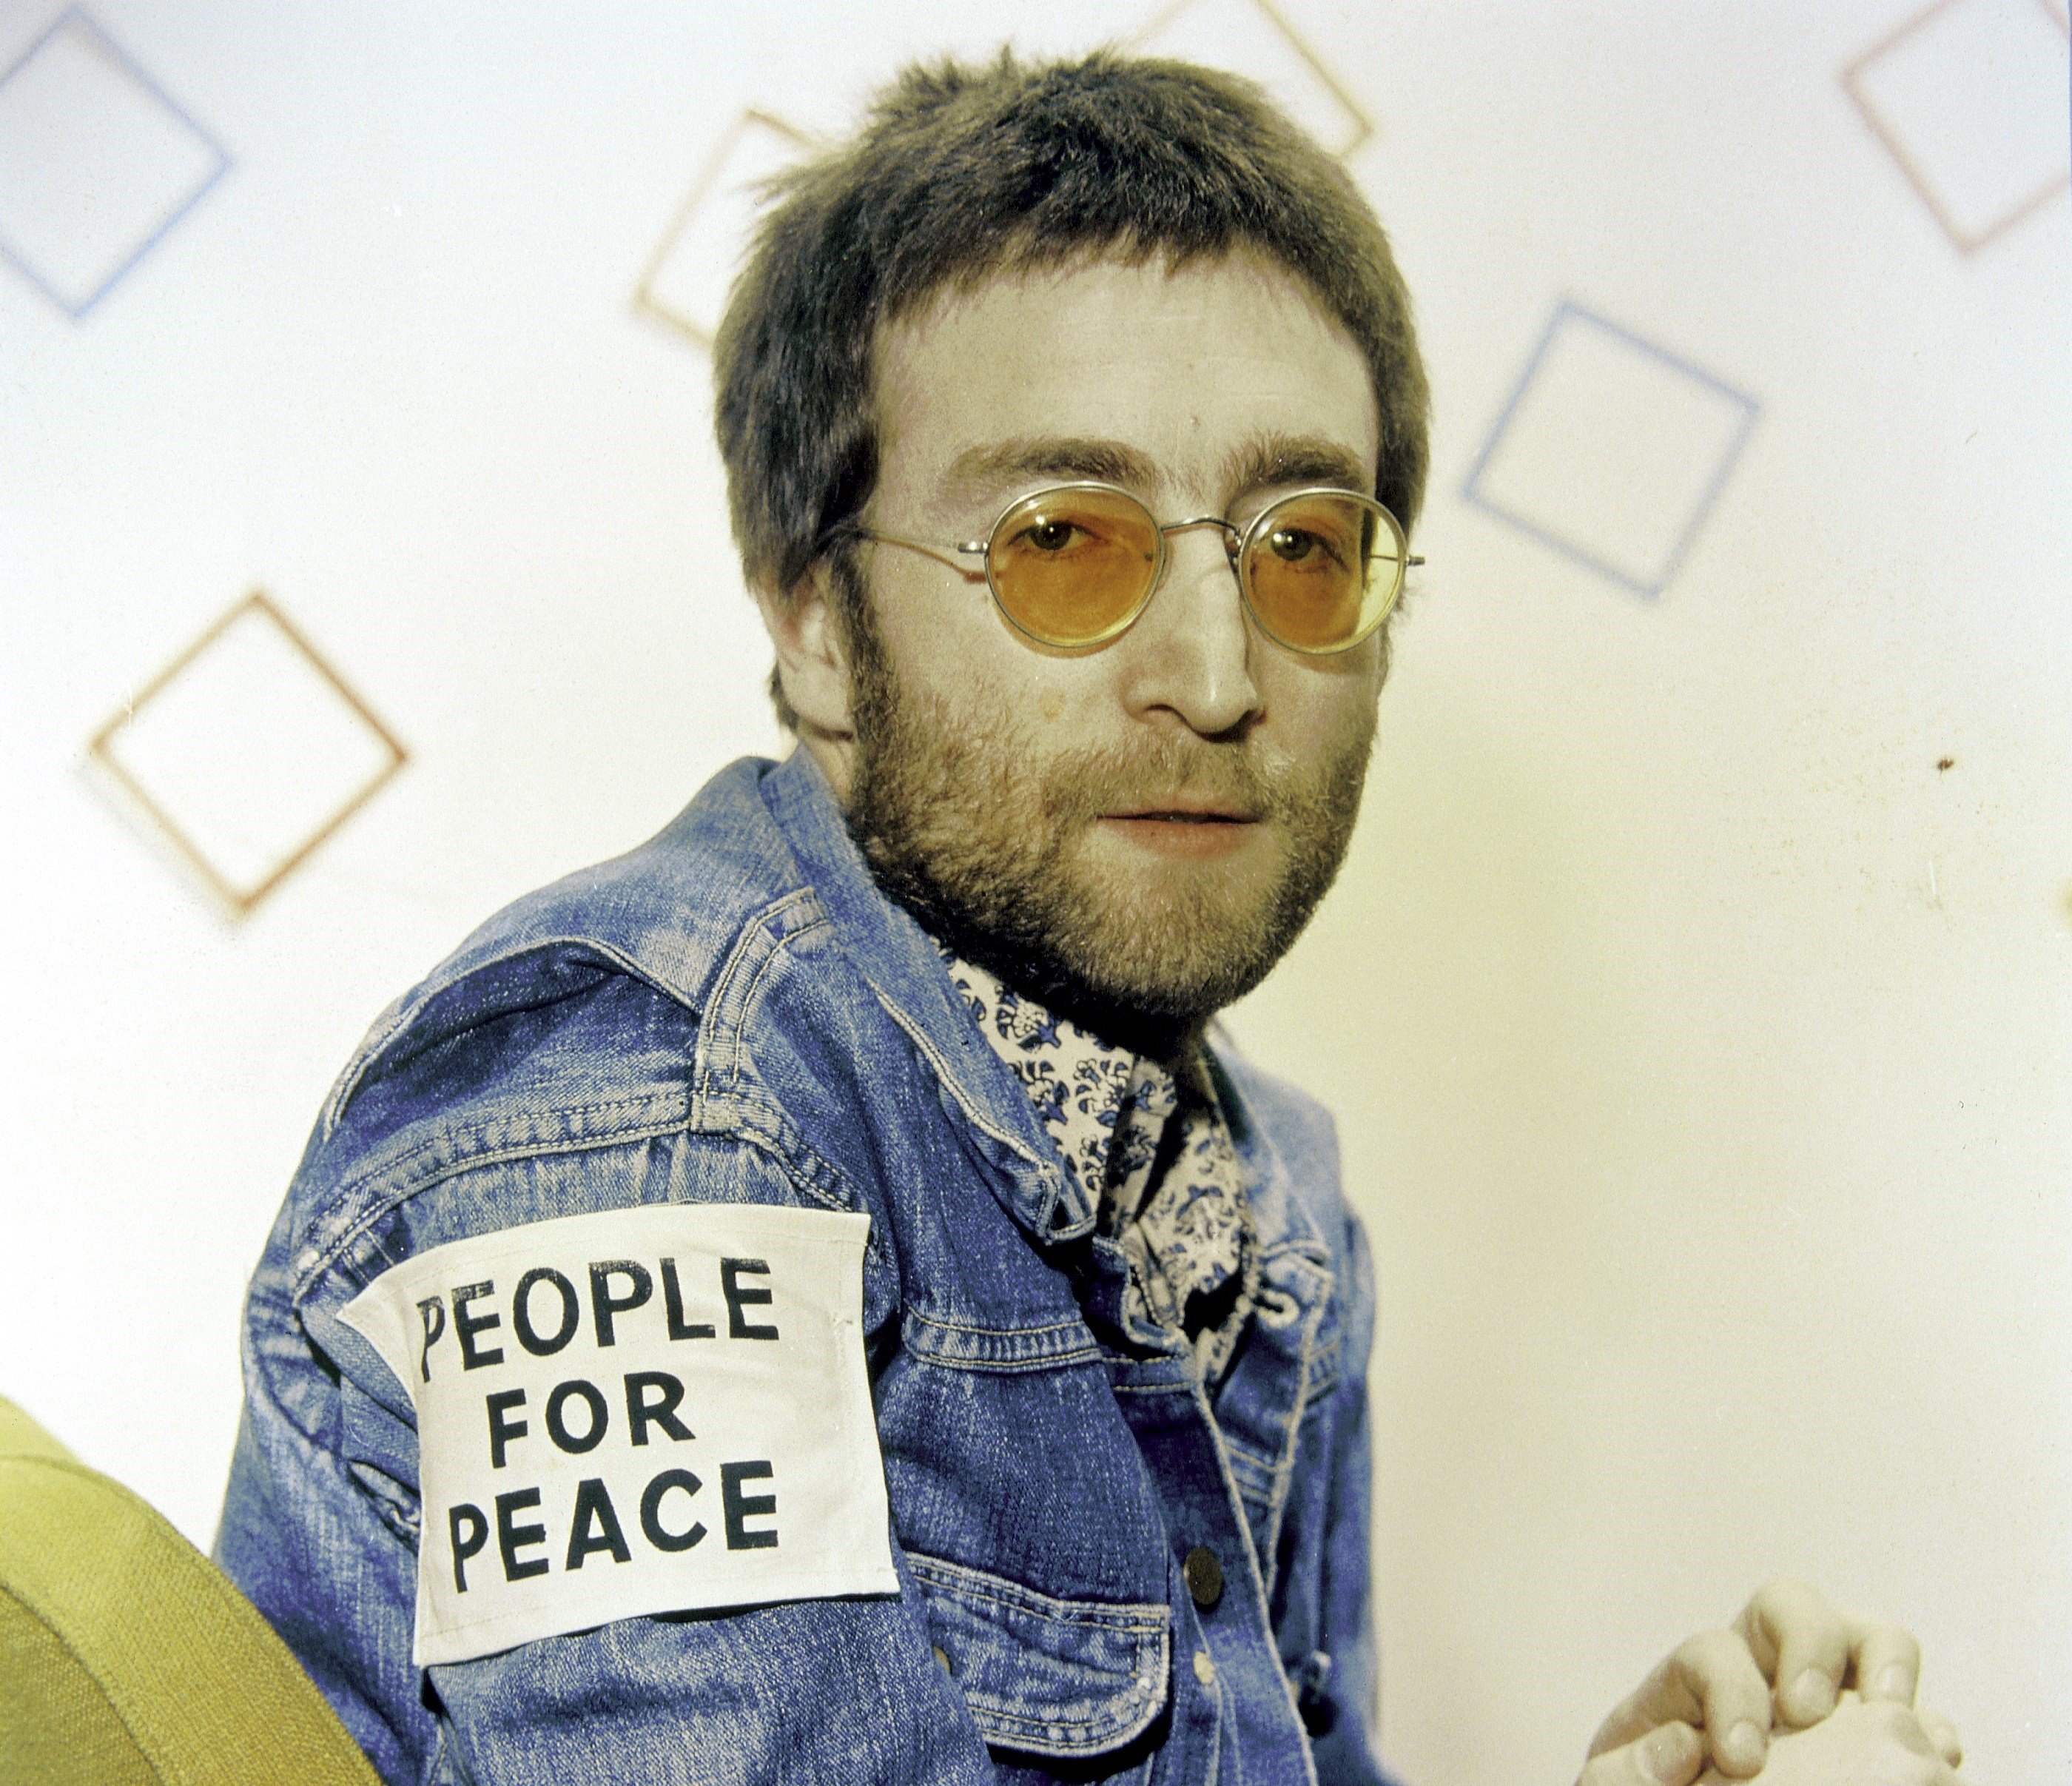 The Beatles' John Lennon wearing blue